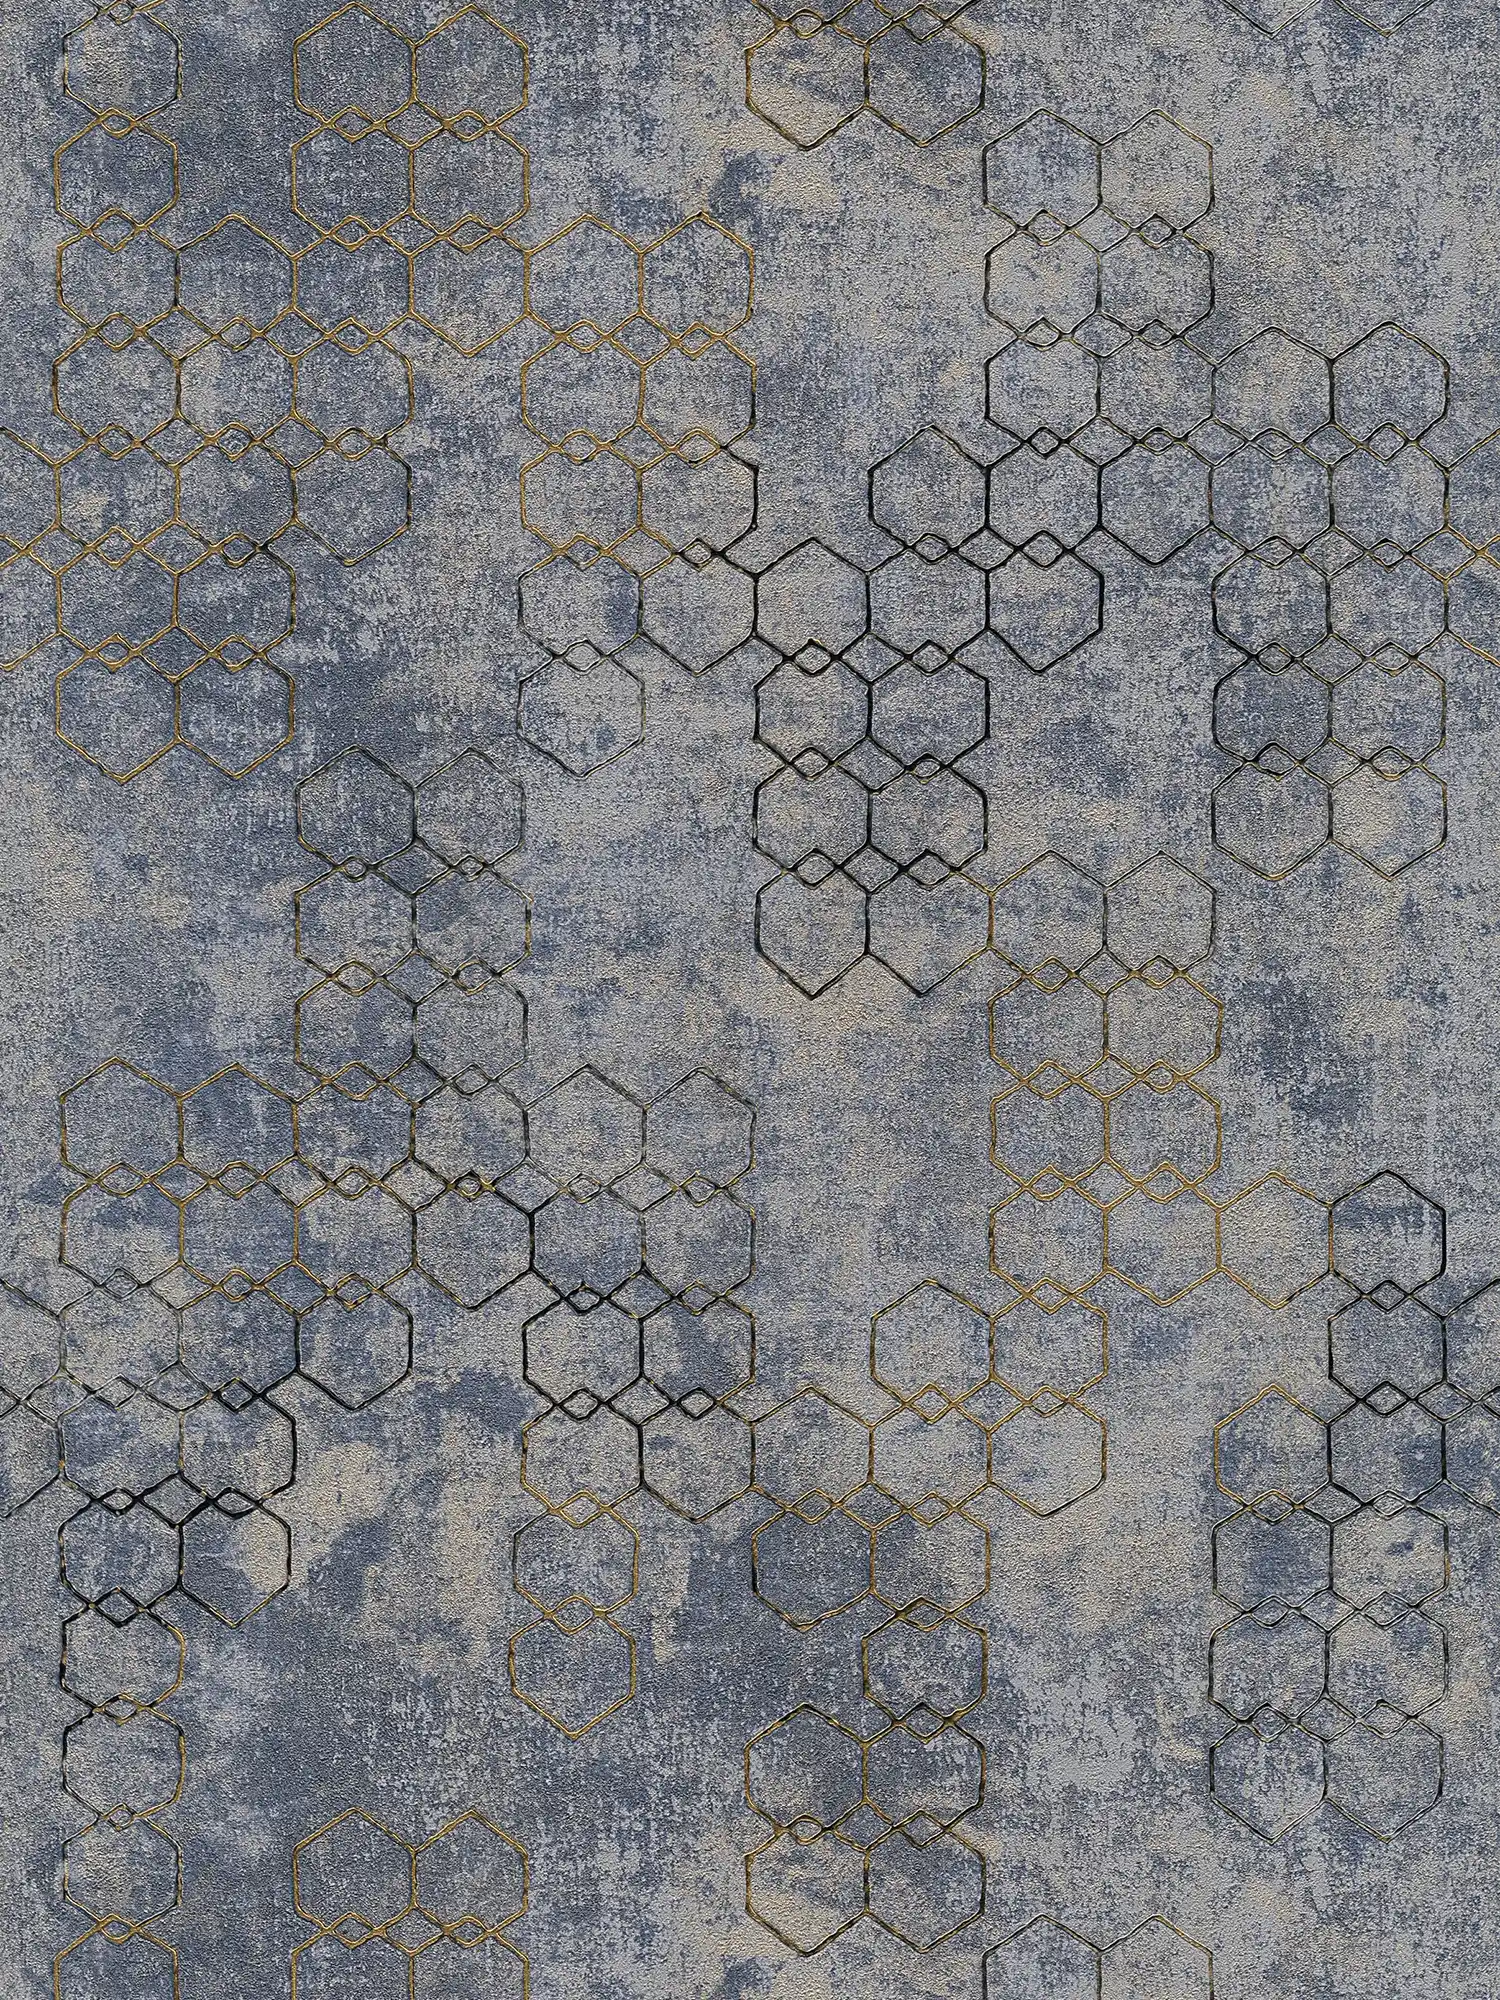 Wallpaper modern design gold & concrete effect - blue, gold, grey
